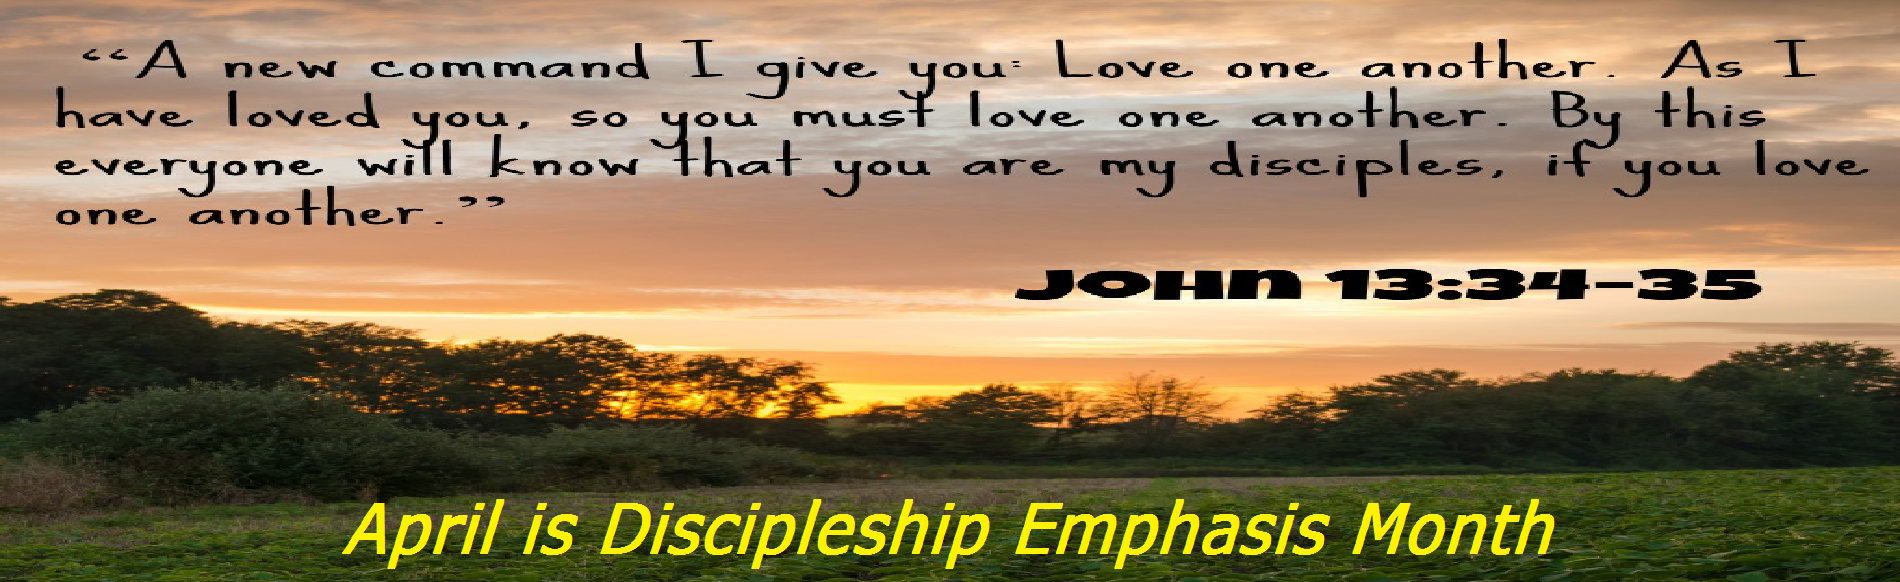 Discipleship Month